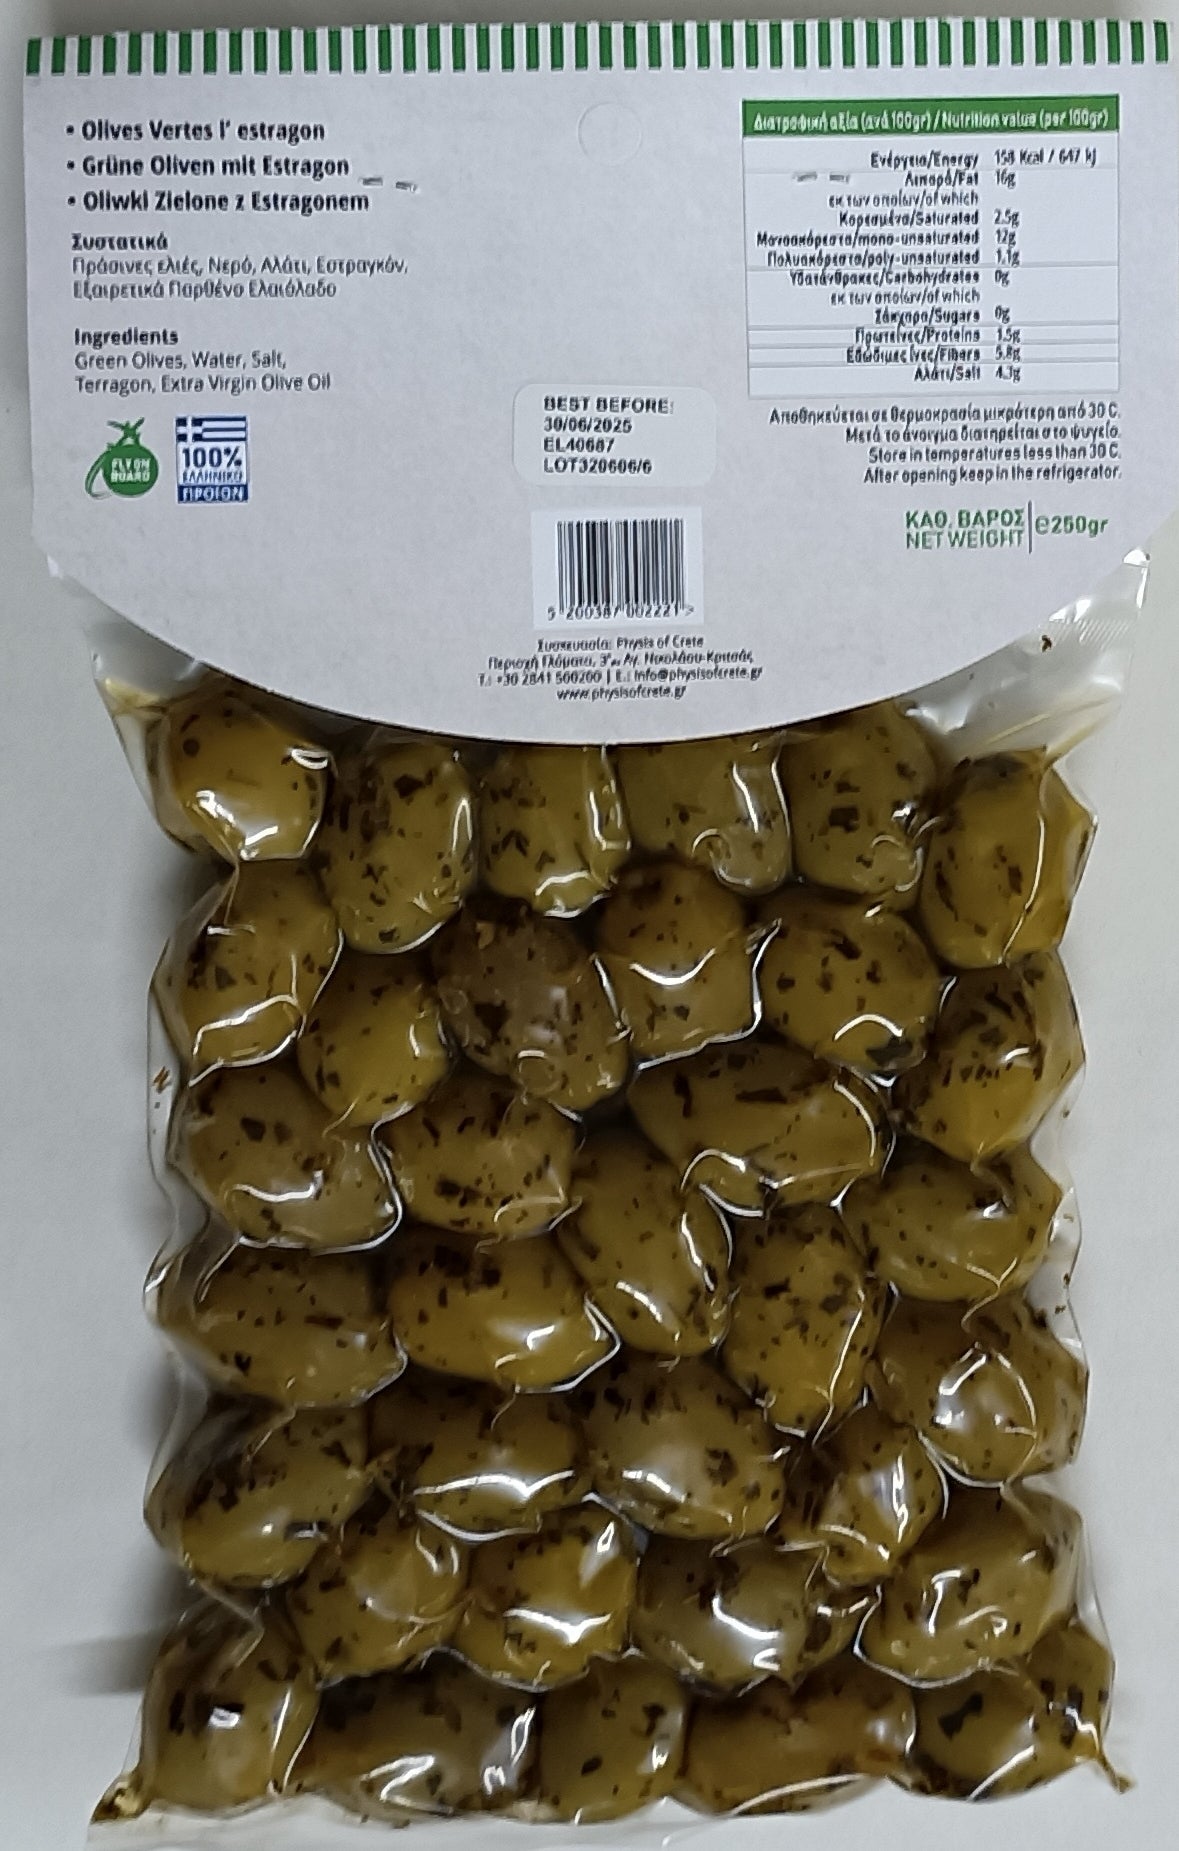 Green olives tarragon - Physis of Crete - Olives - Cretan Garden GmbH